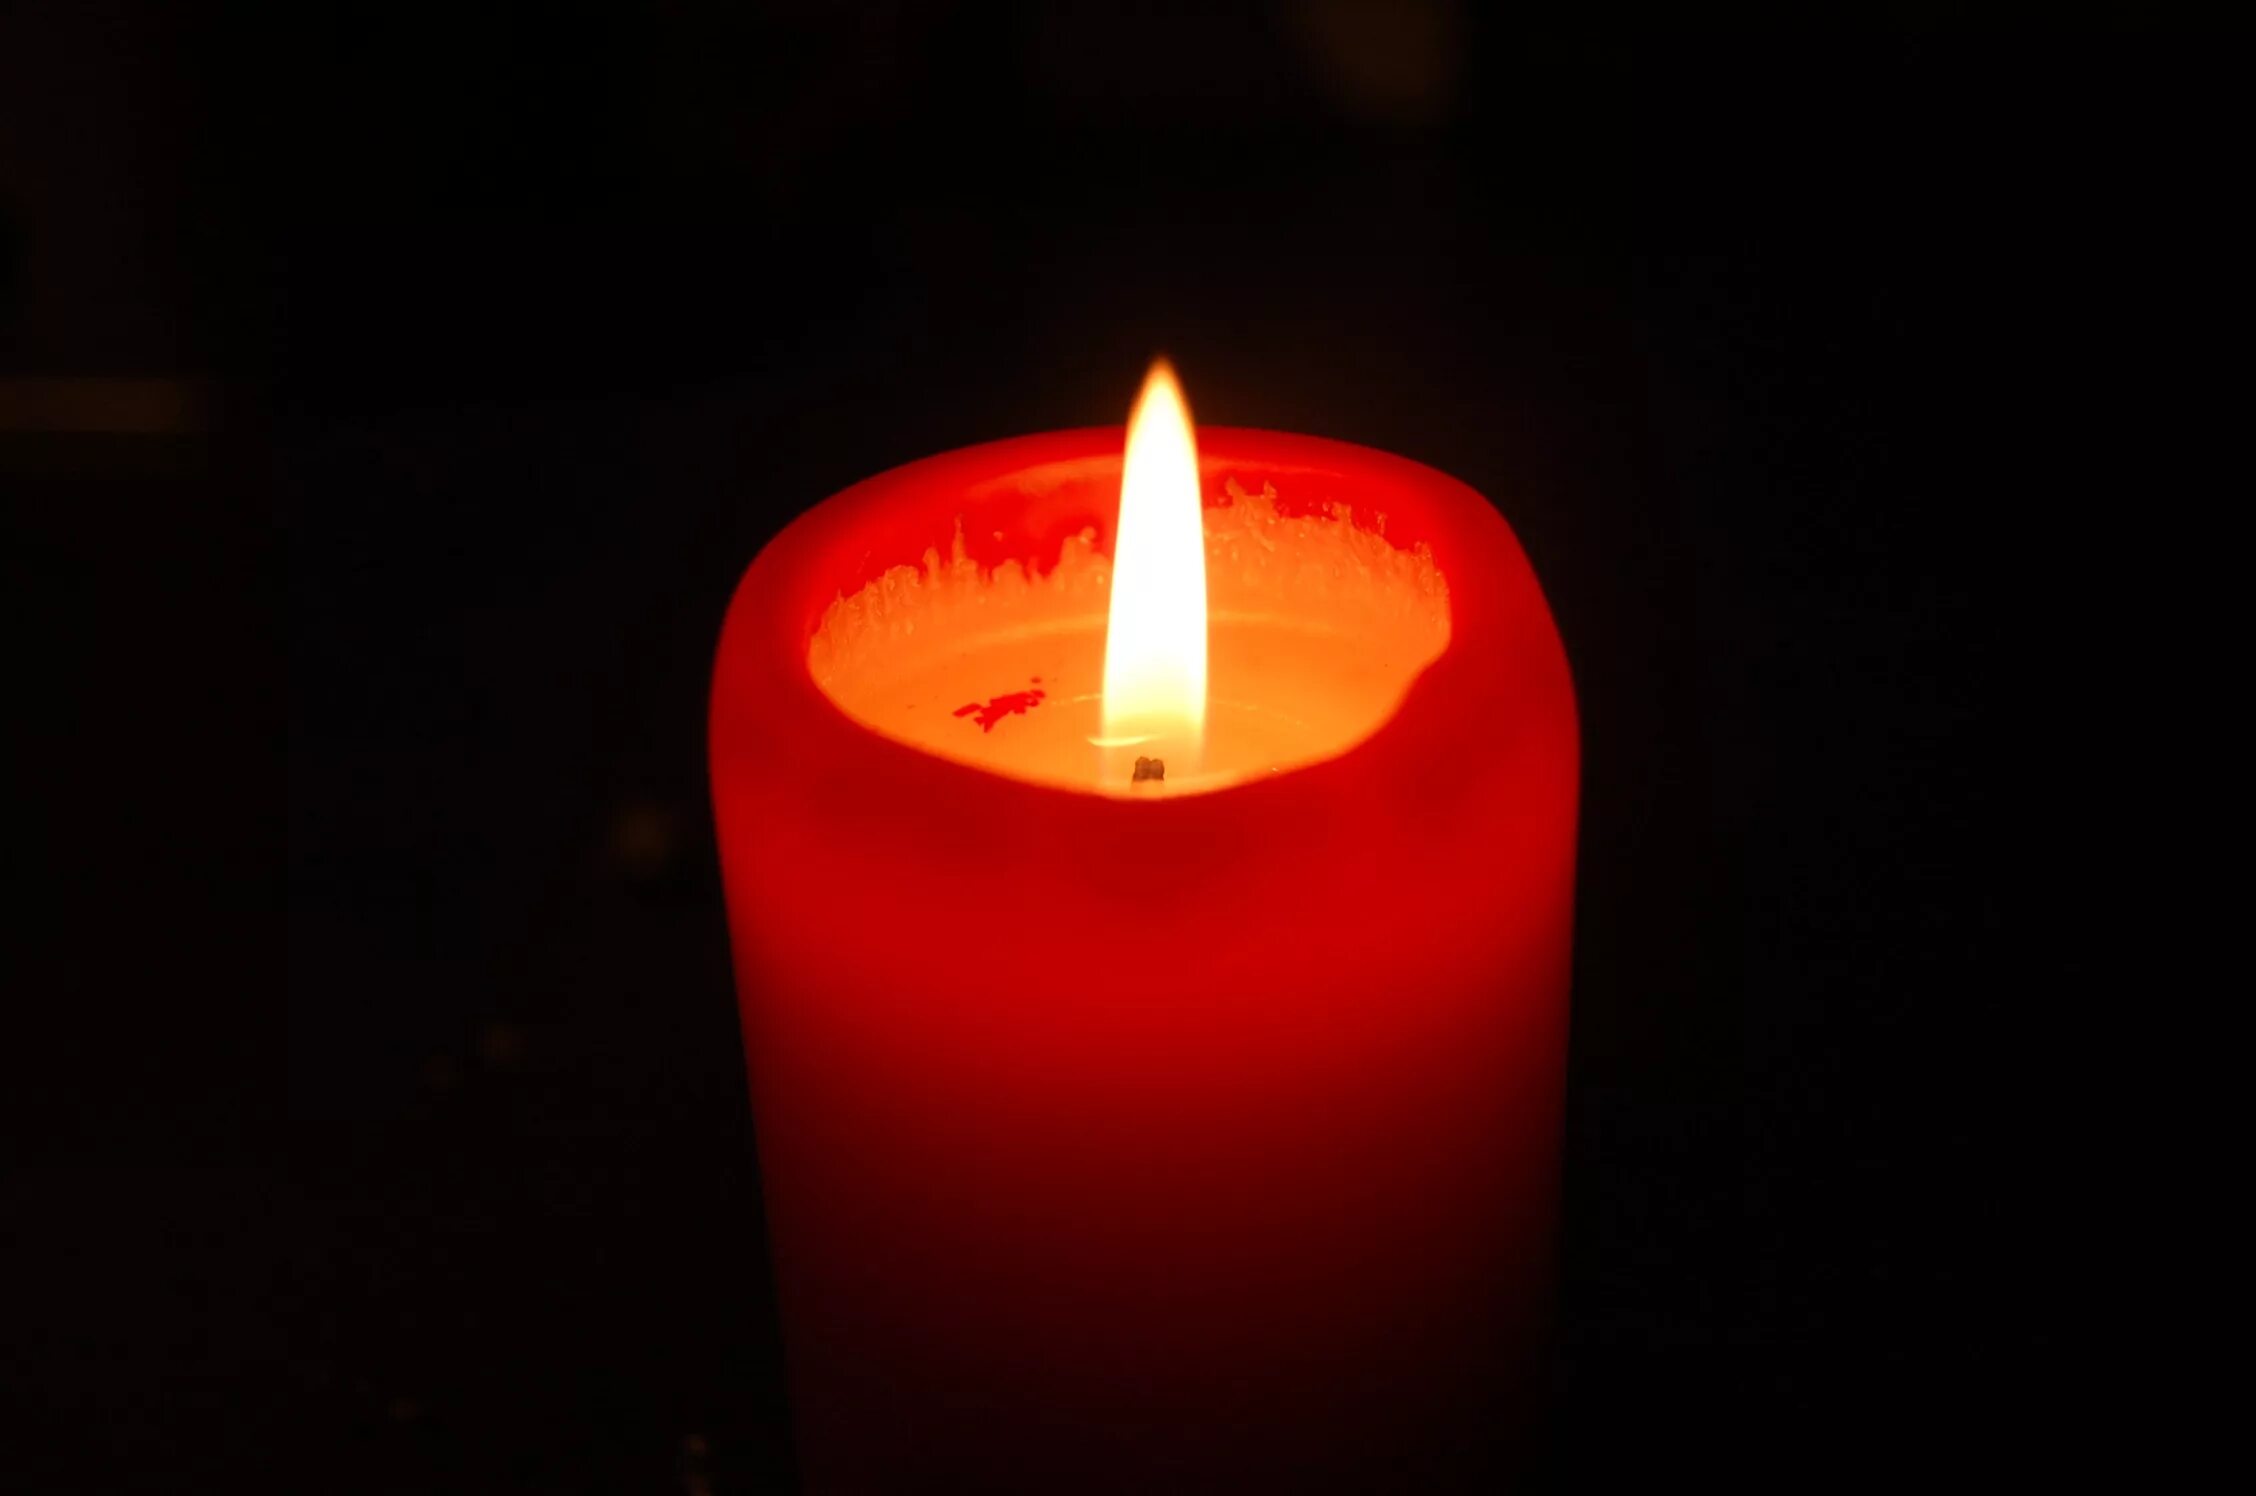 Свеча стала черной. Свечка. Свеча в темноте. Три свечи в темноте. Красные свечи в темно е.